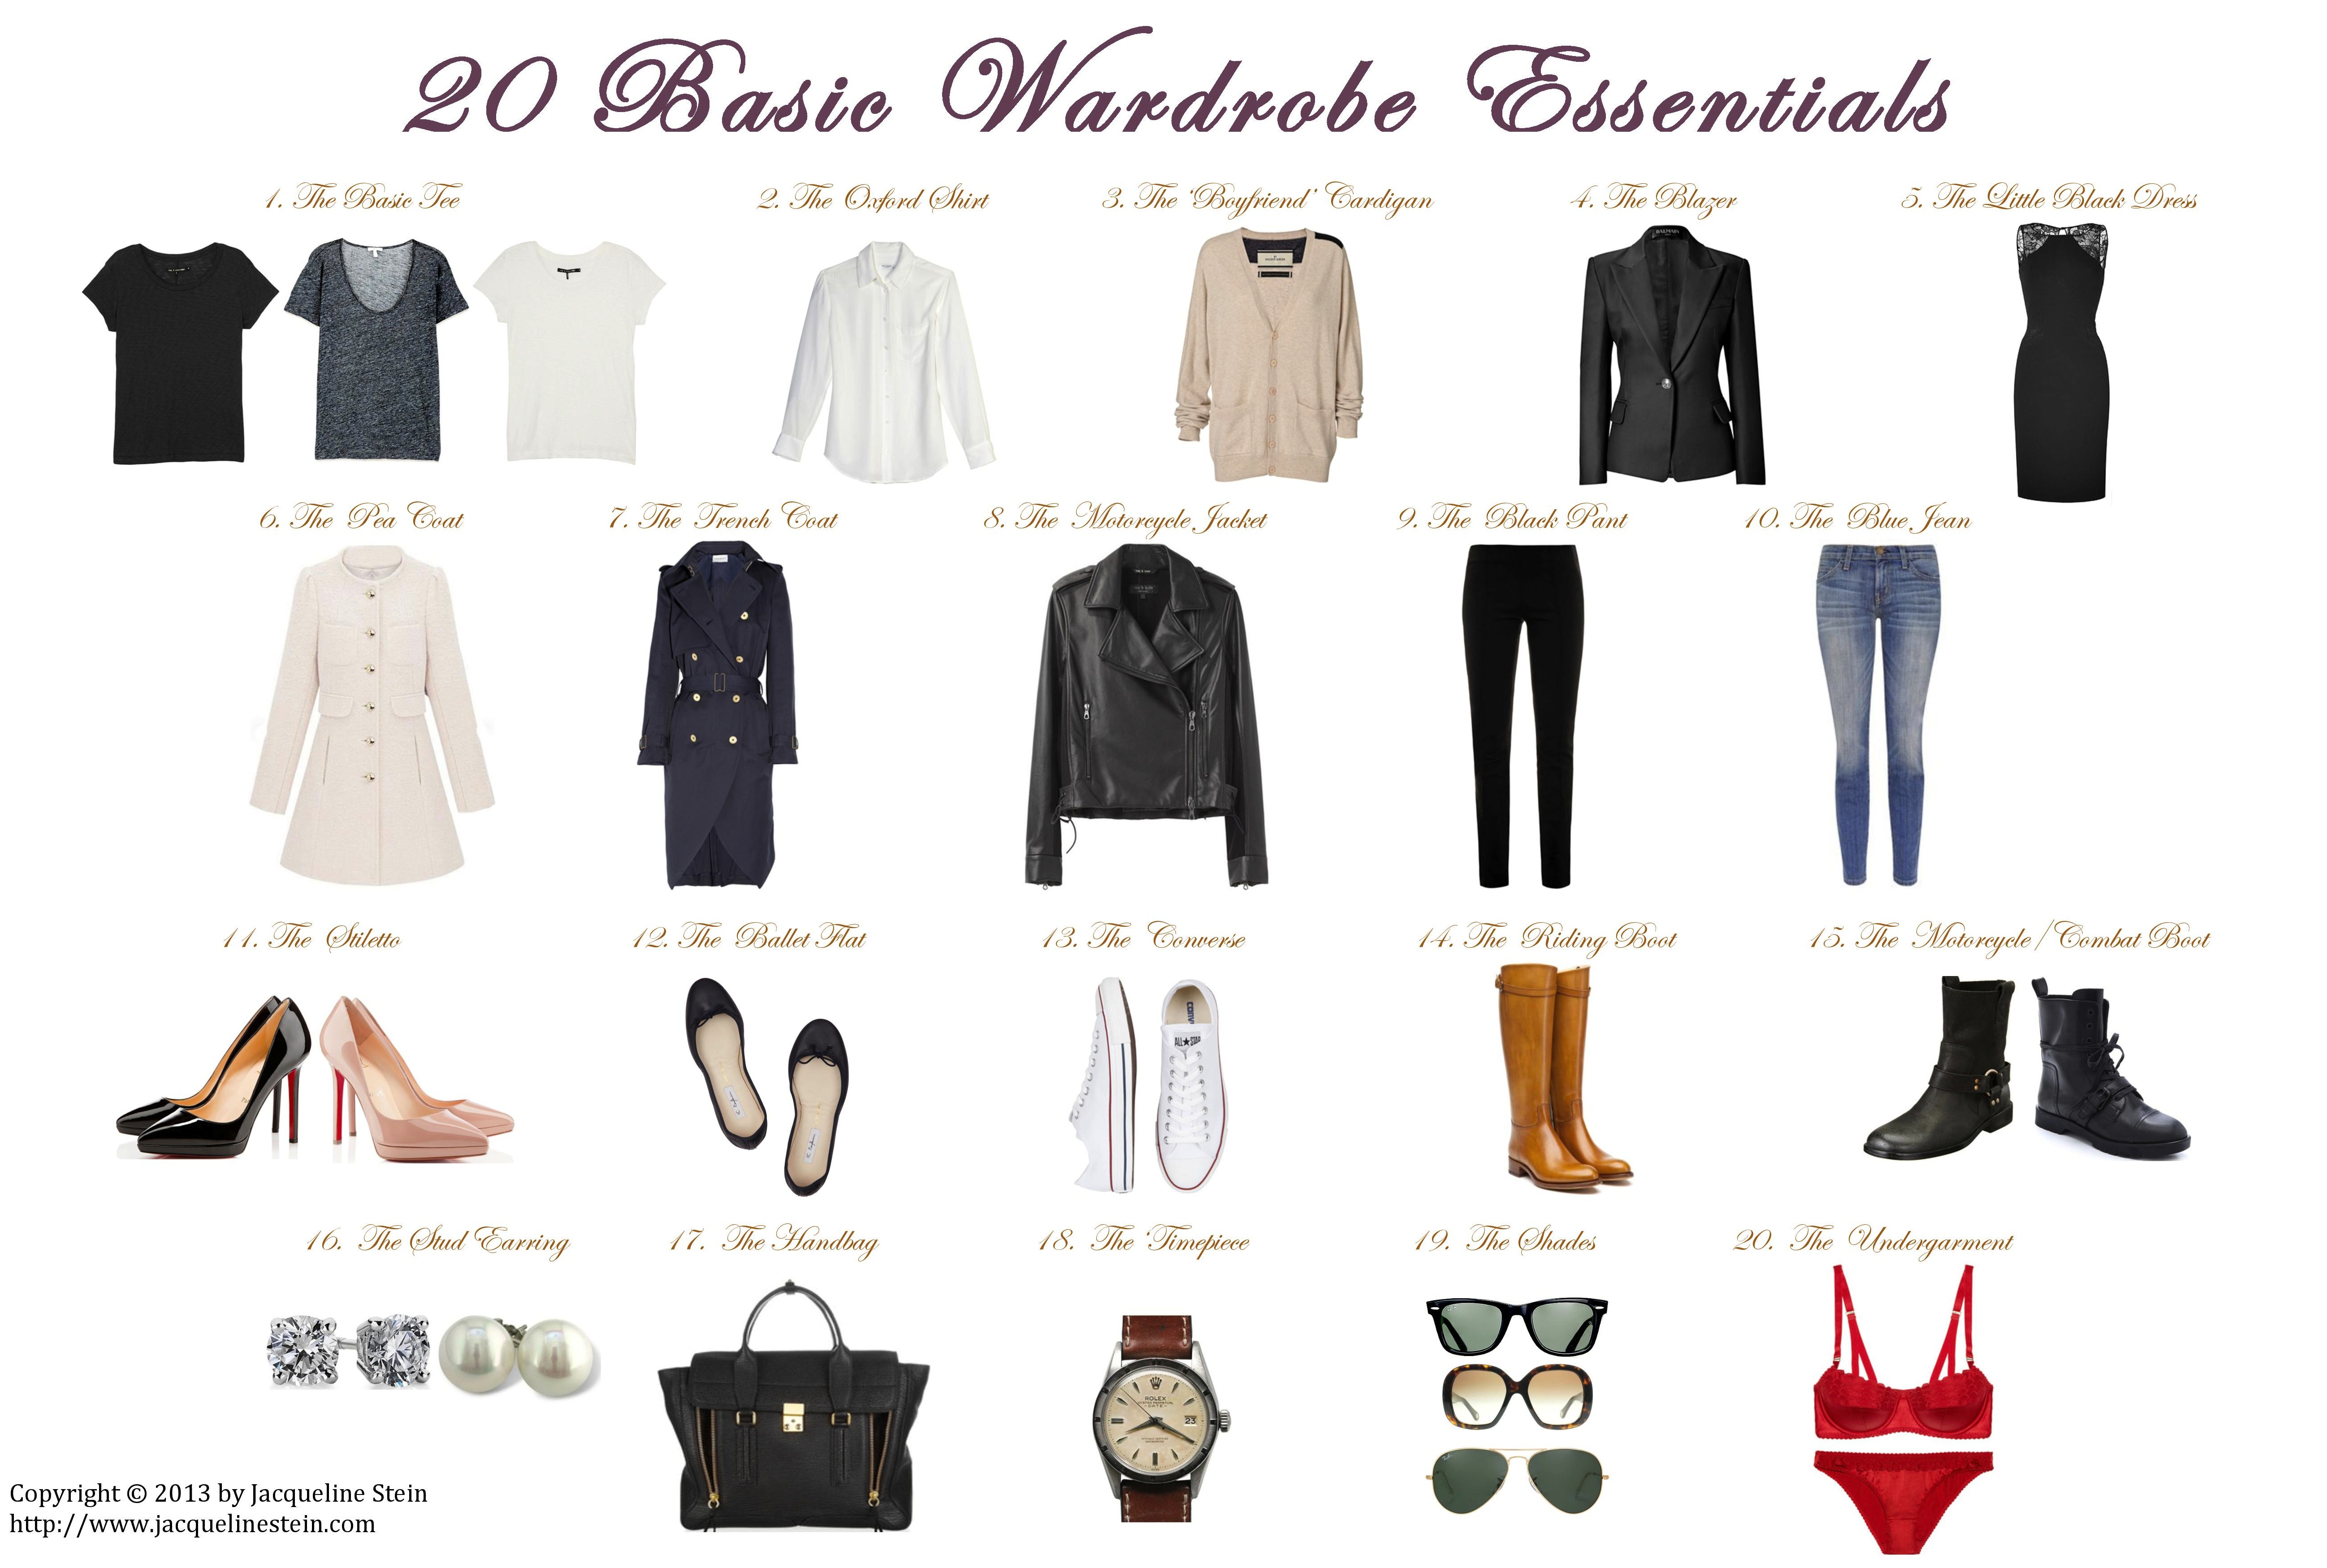 http://theculturalcurator.files.wordpress.com/2013/02/20-basic-wardrobe-essentials.jpg